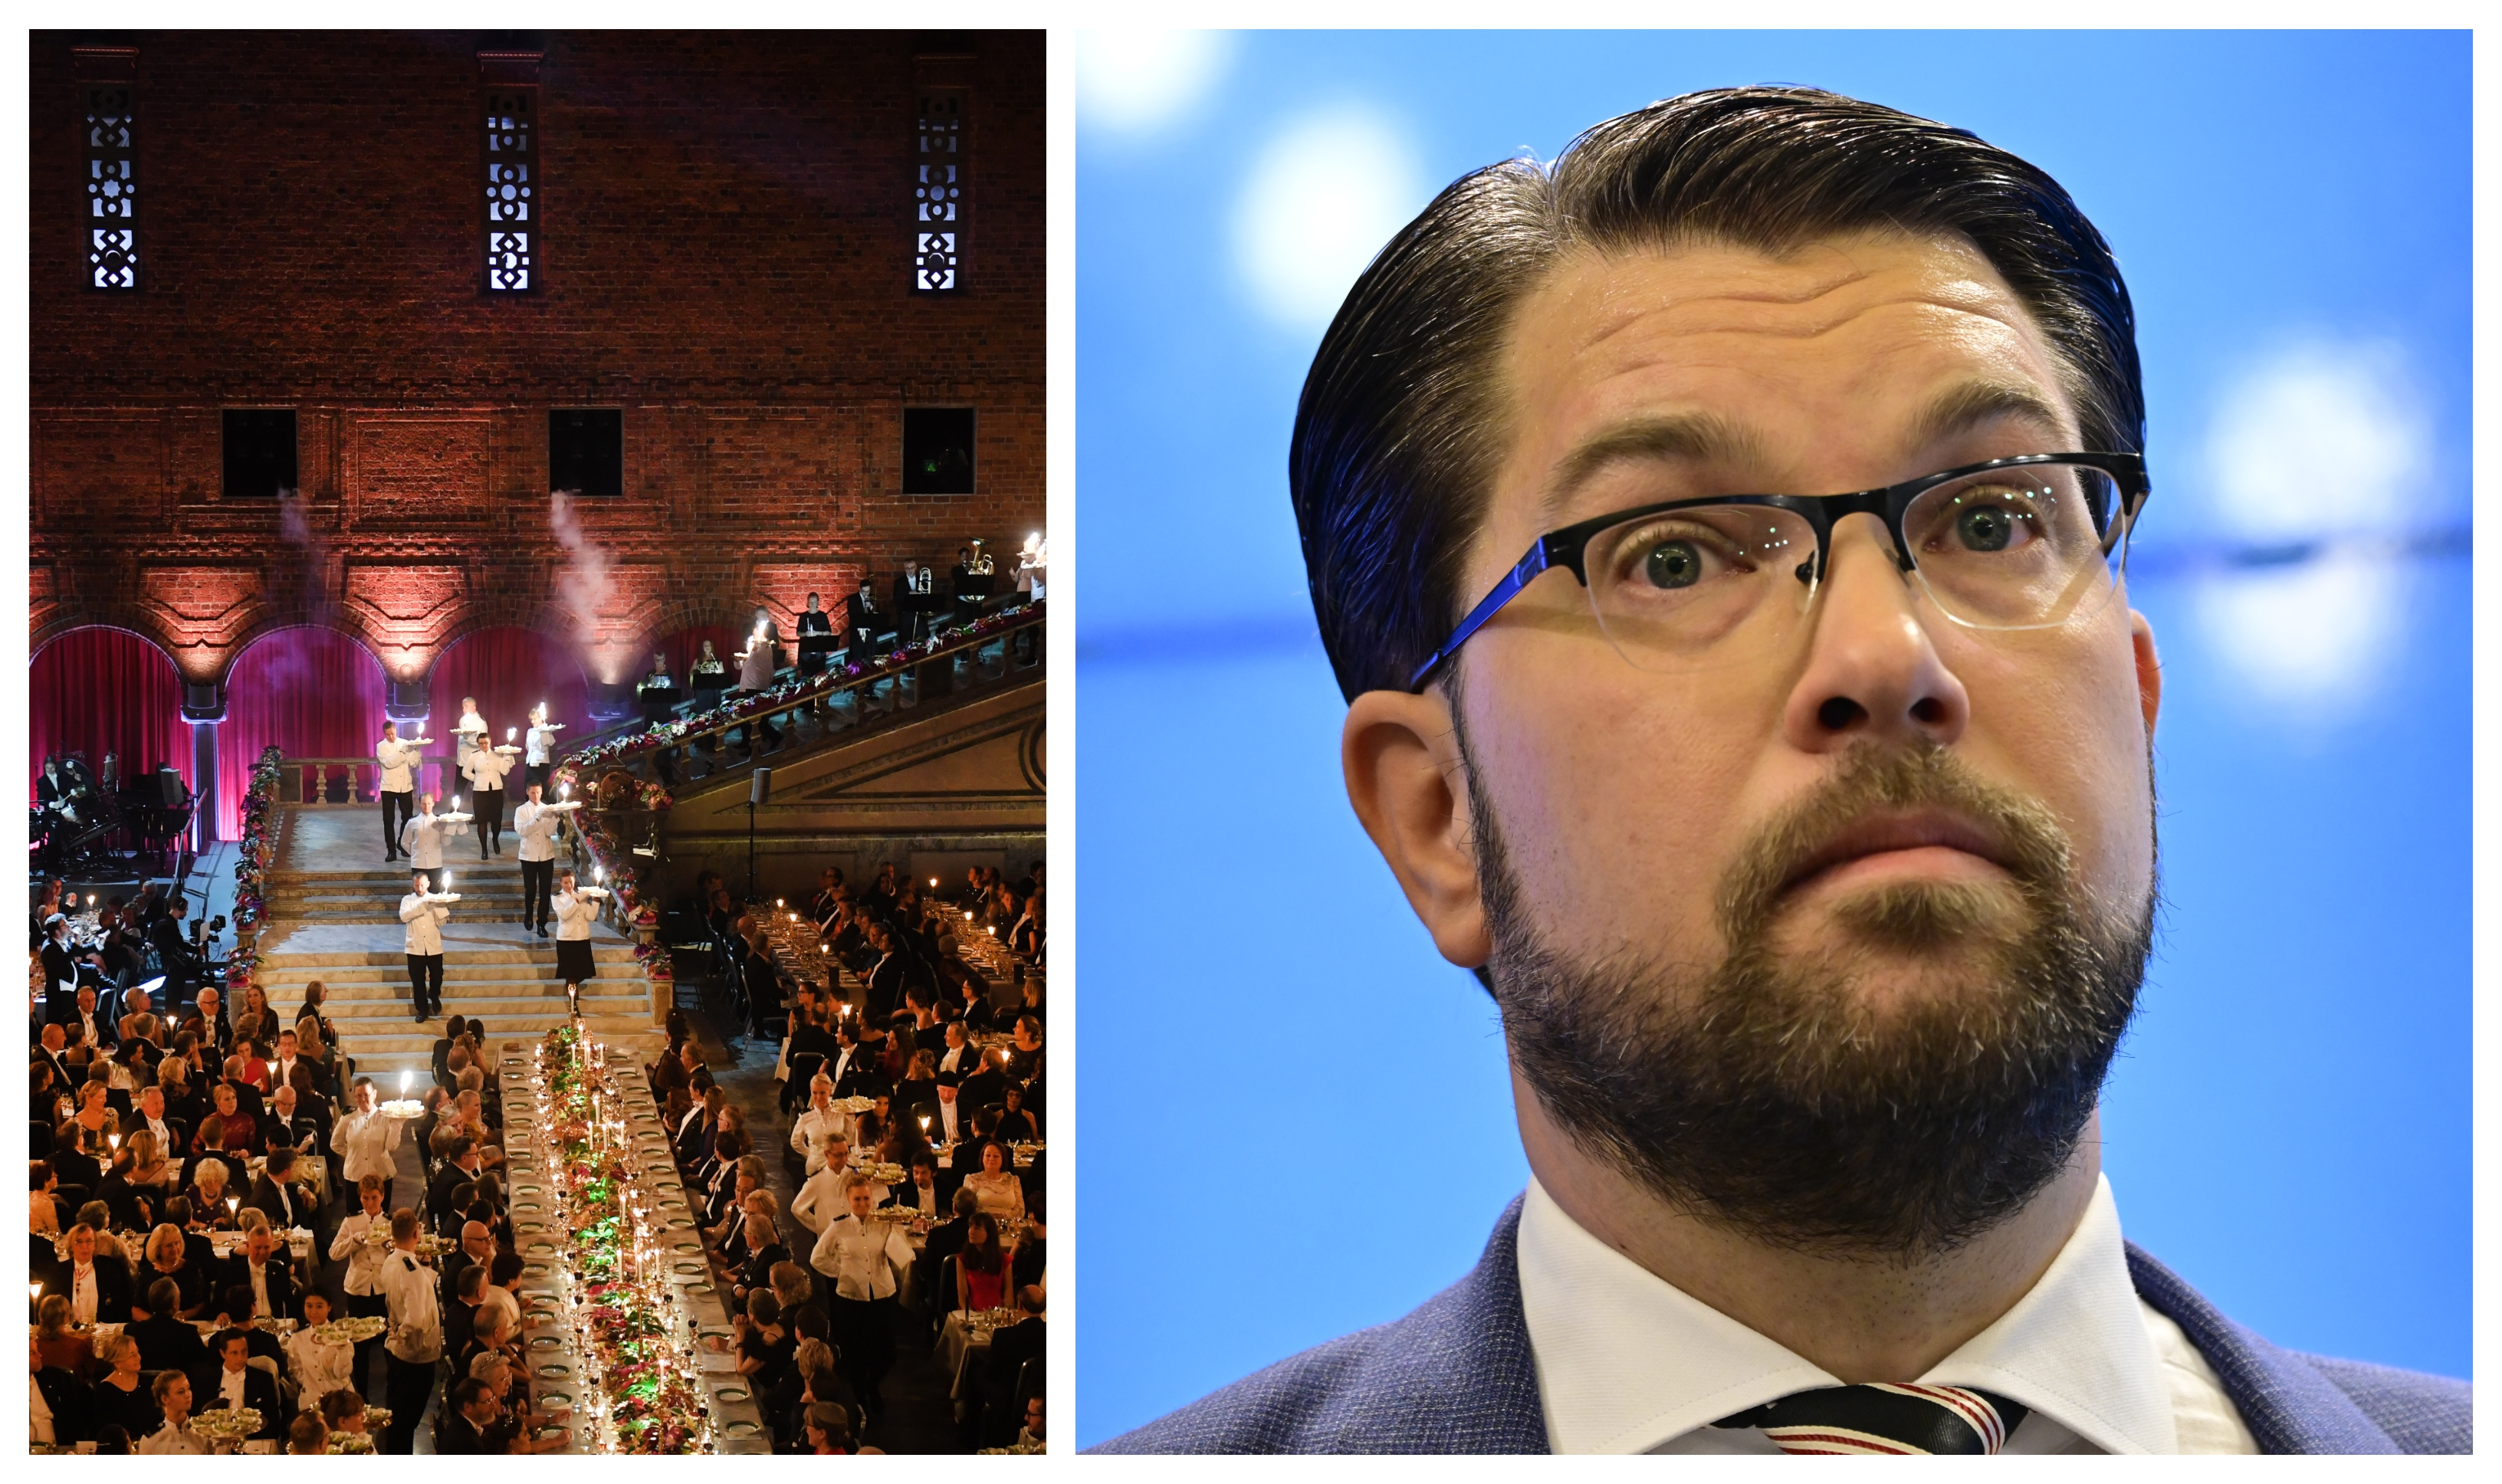 Jimmie Åkesson, TT, Sverige, Sverigedemokraterna, Politik